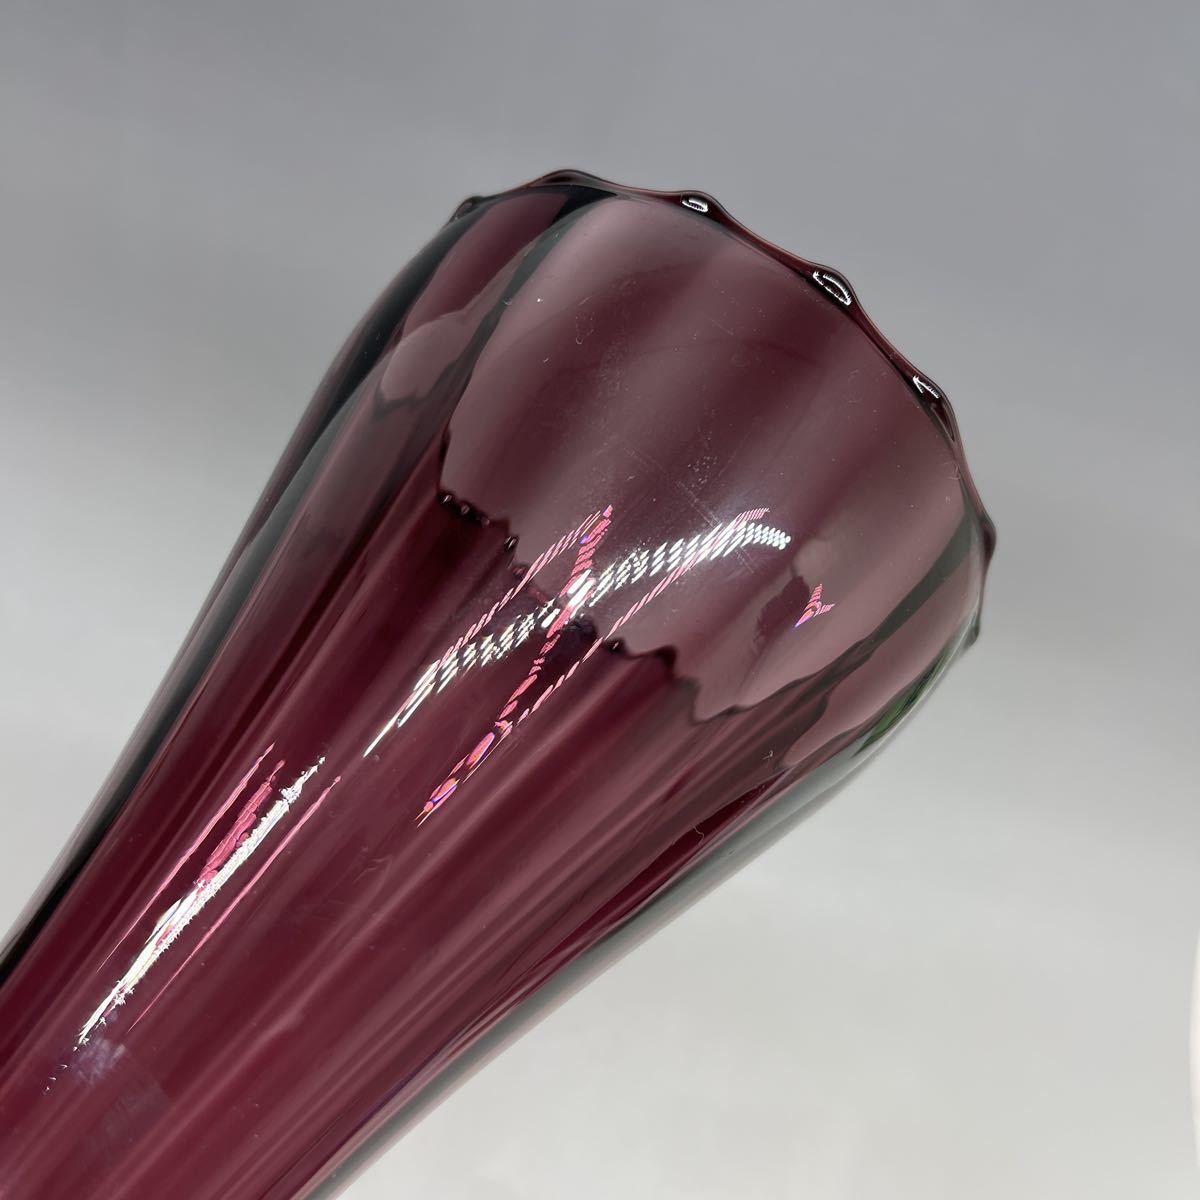  extra-large vase glass vase flower go in purple interior ornament 